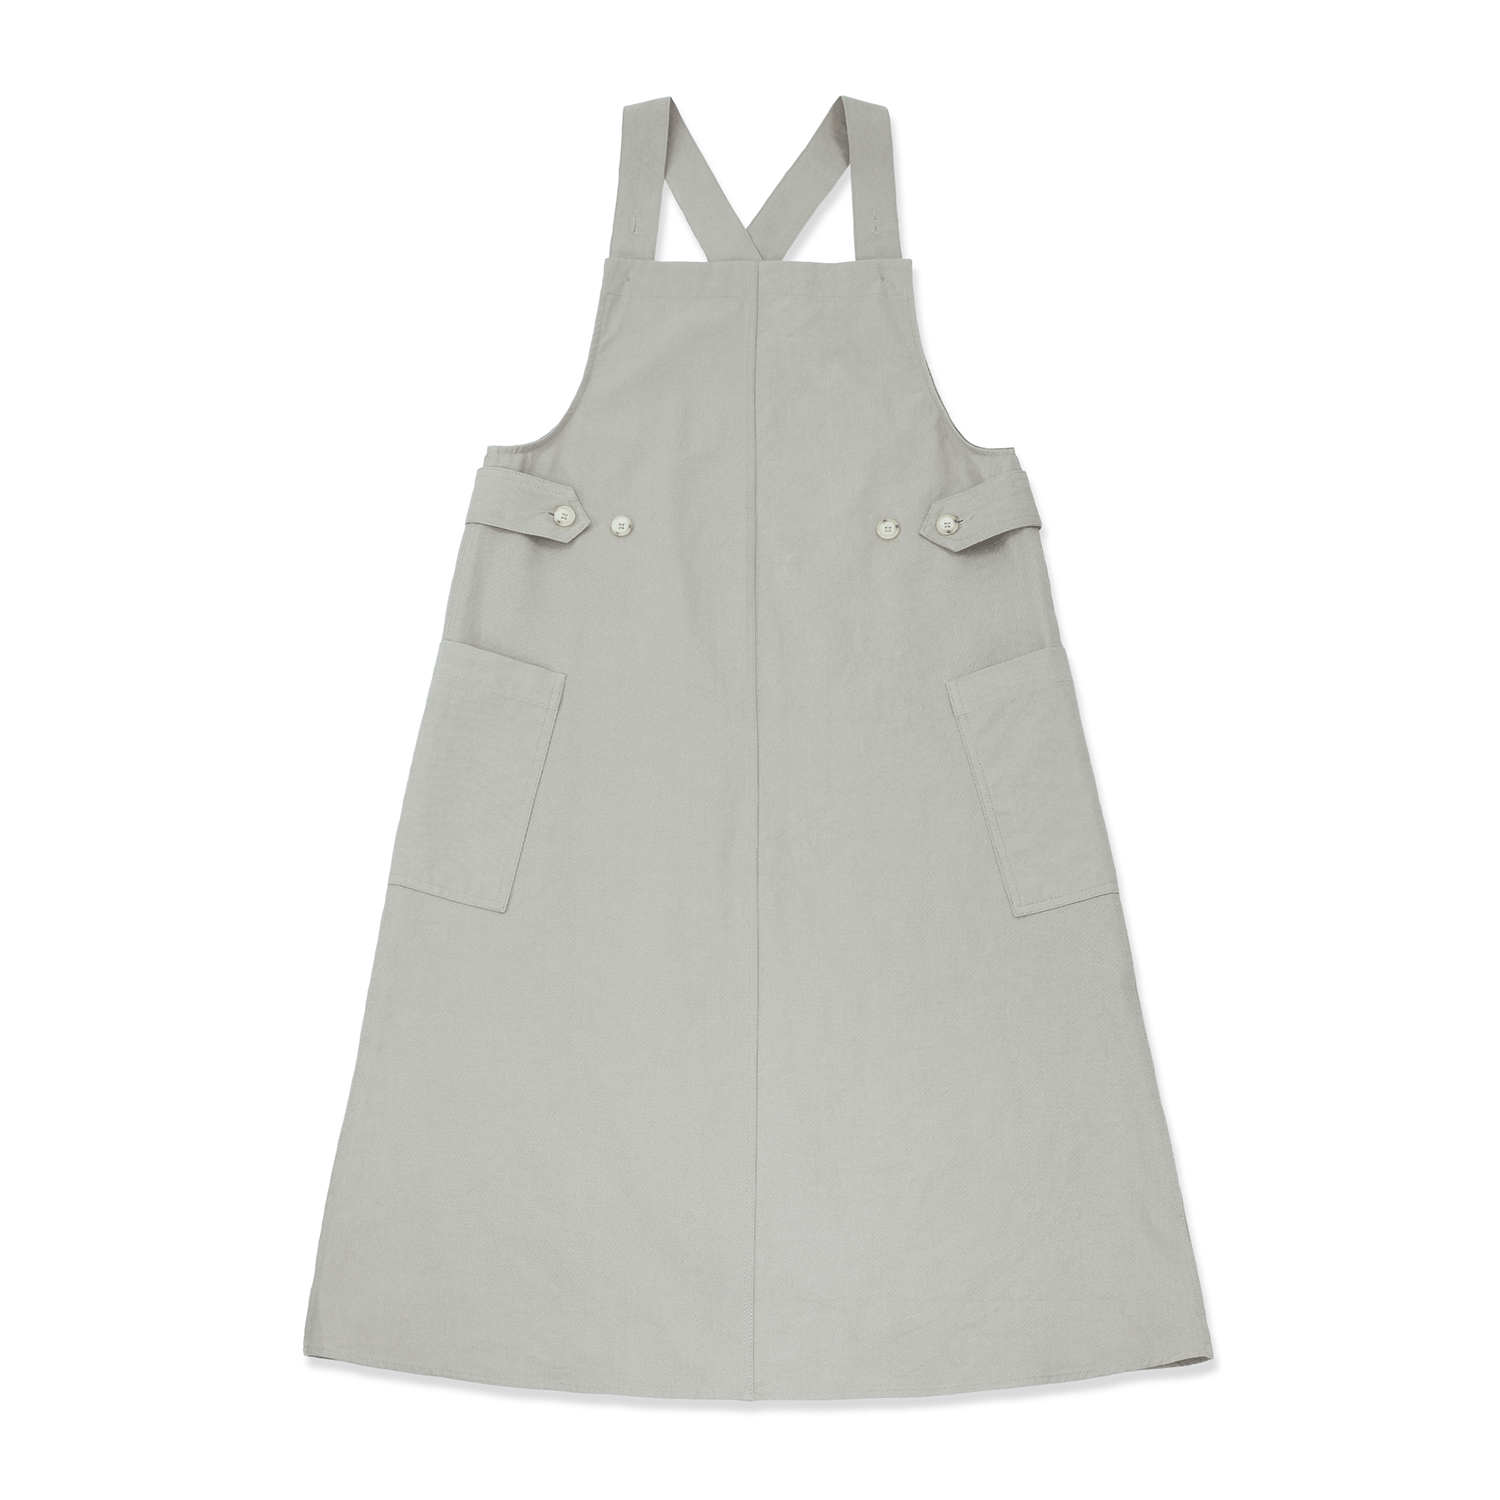 Skirt Overalls - French Gray